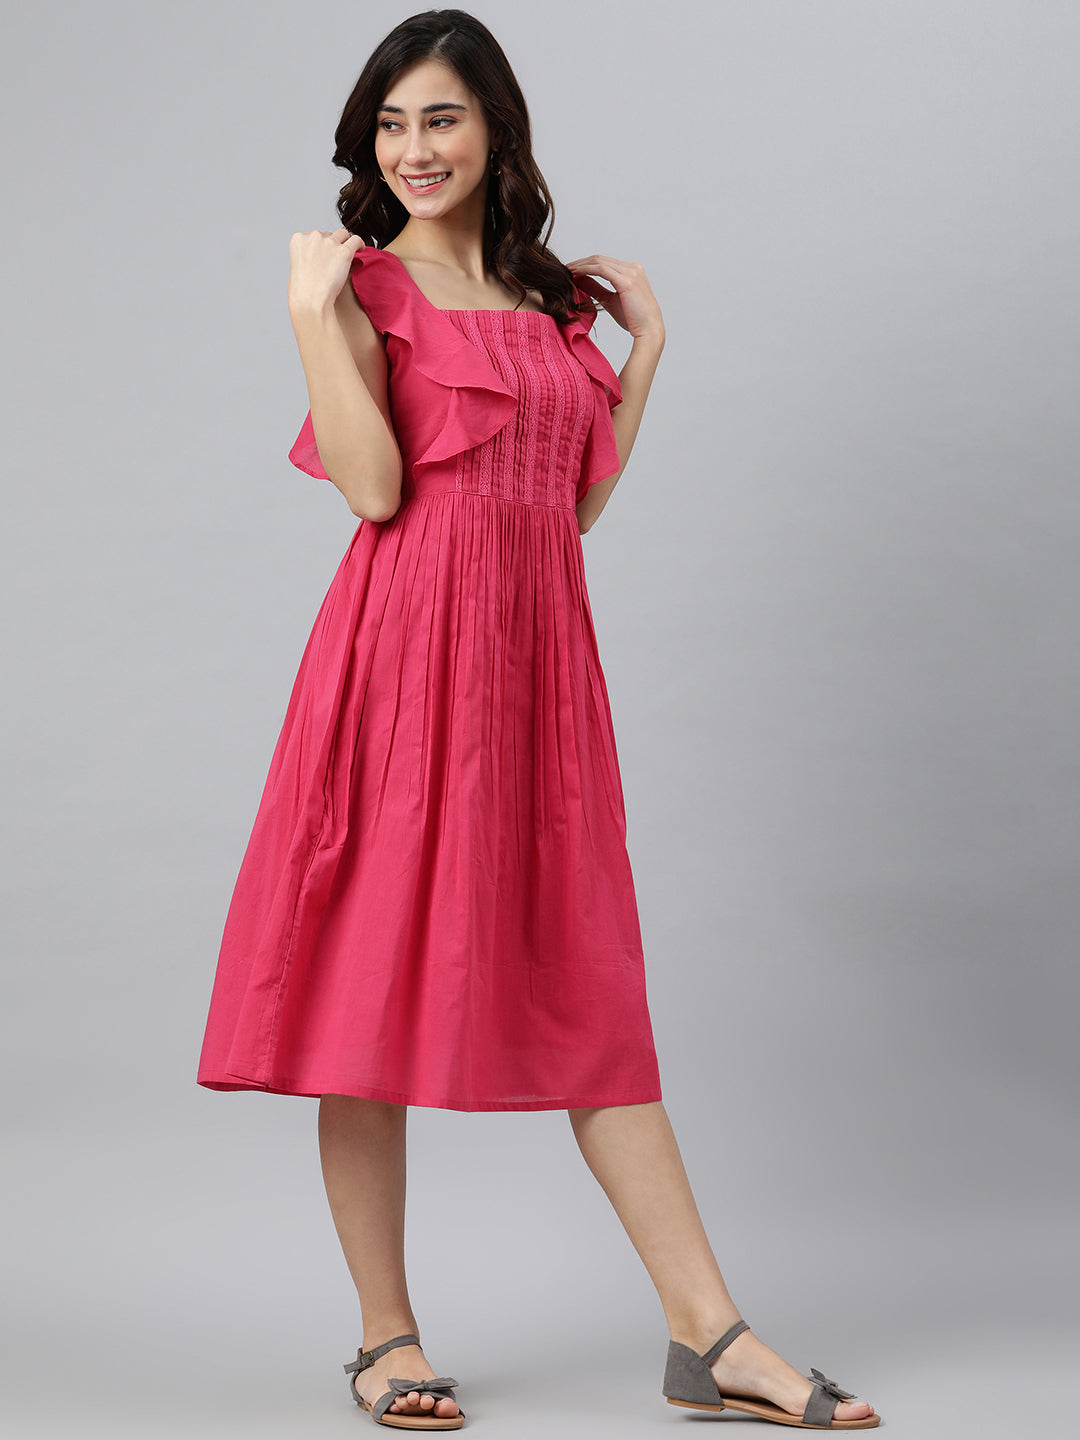 Women's Solid Pink Cotton Dress - Janasya